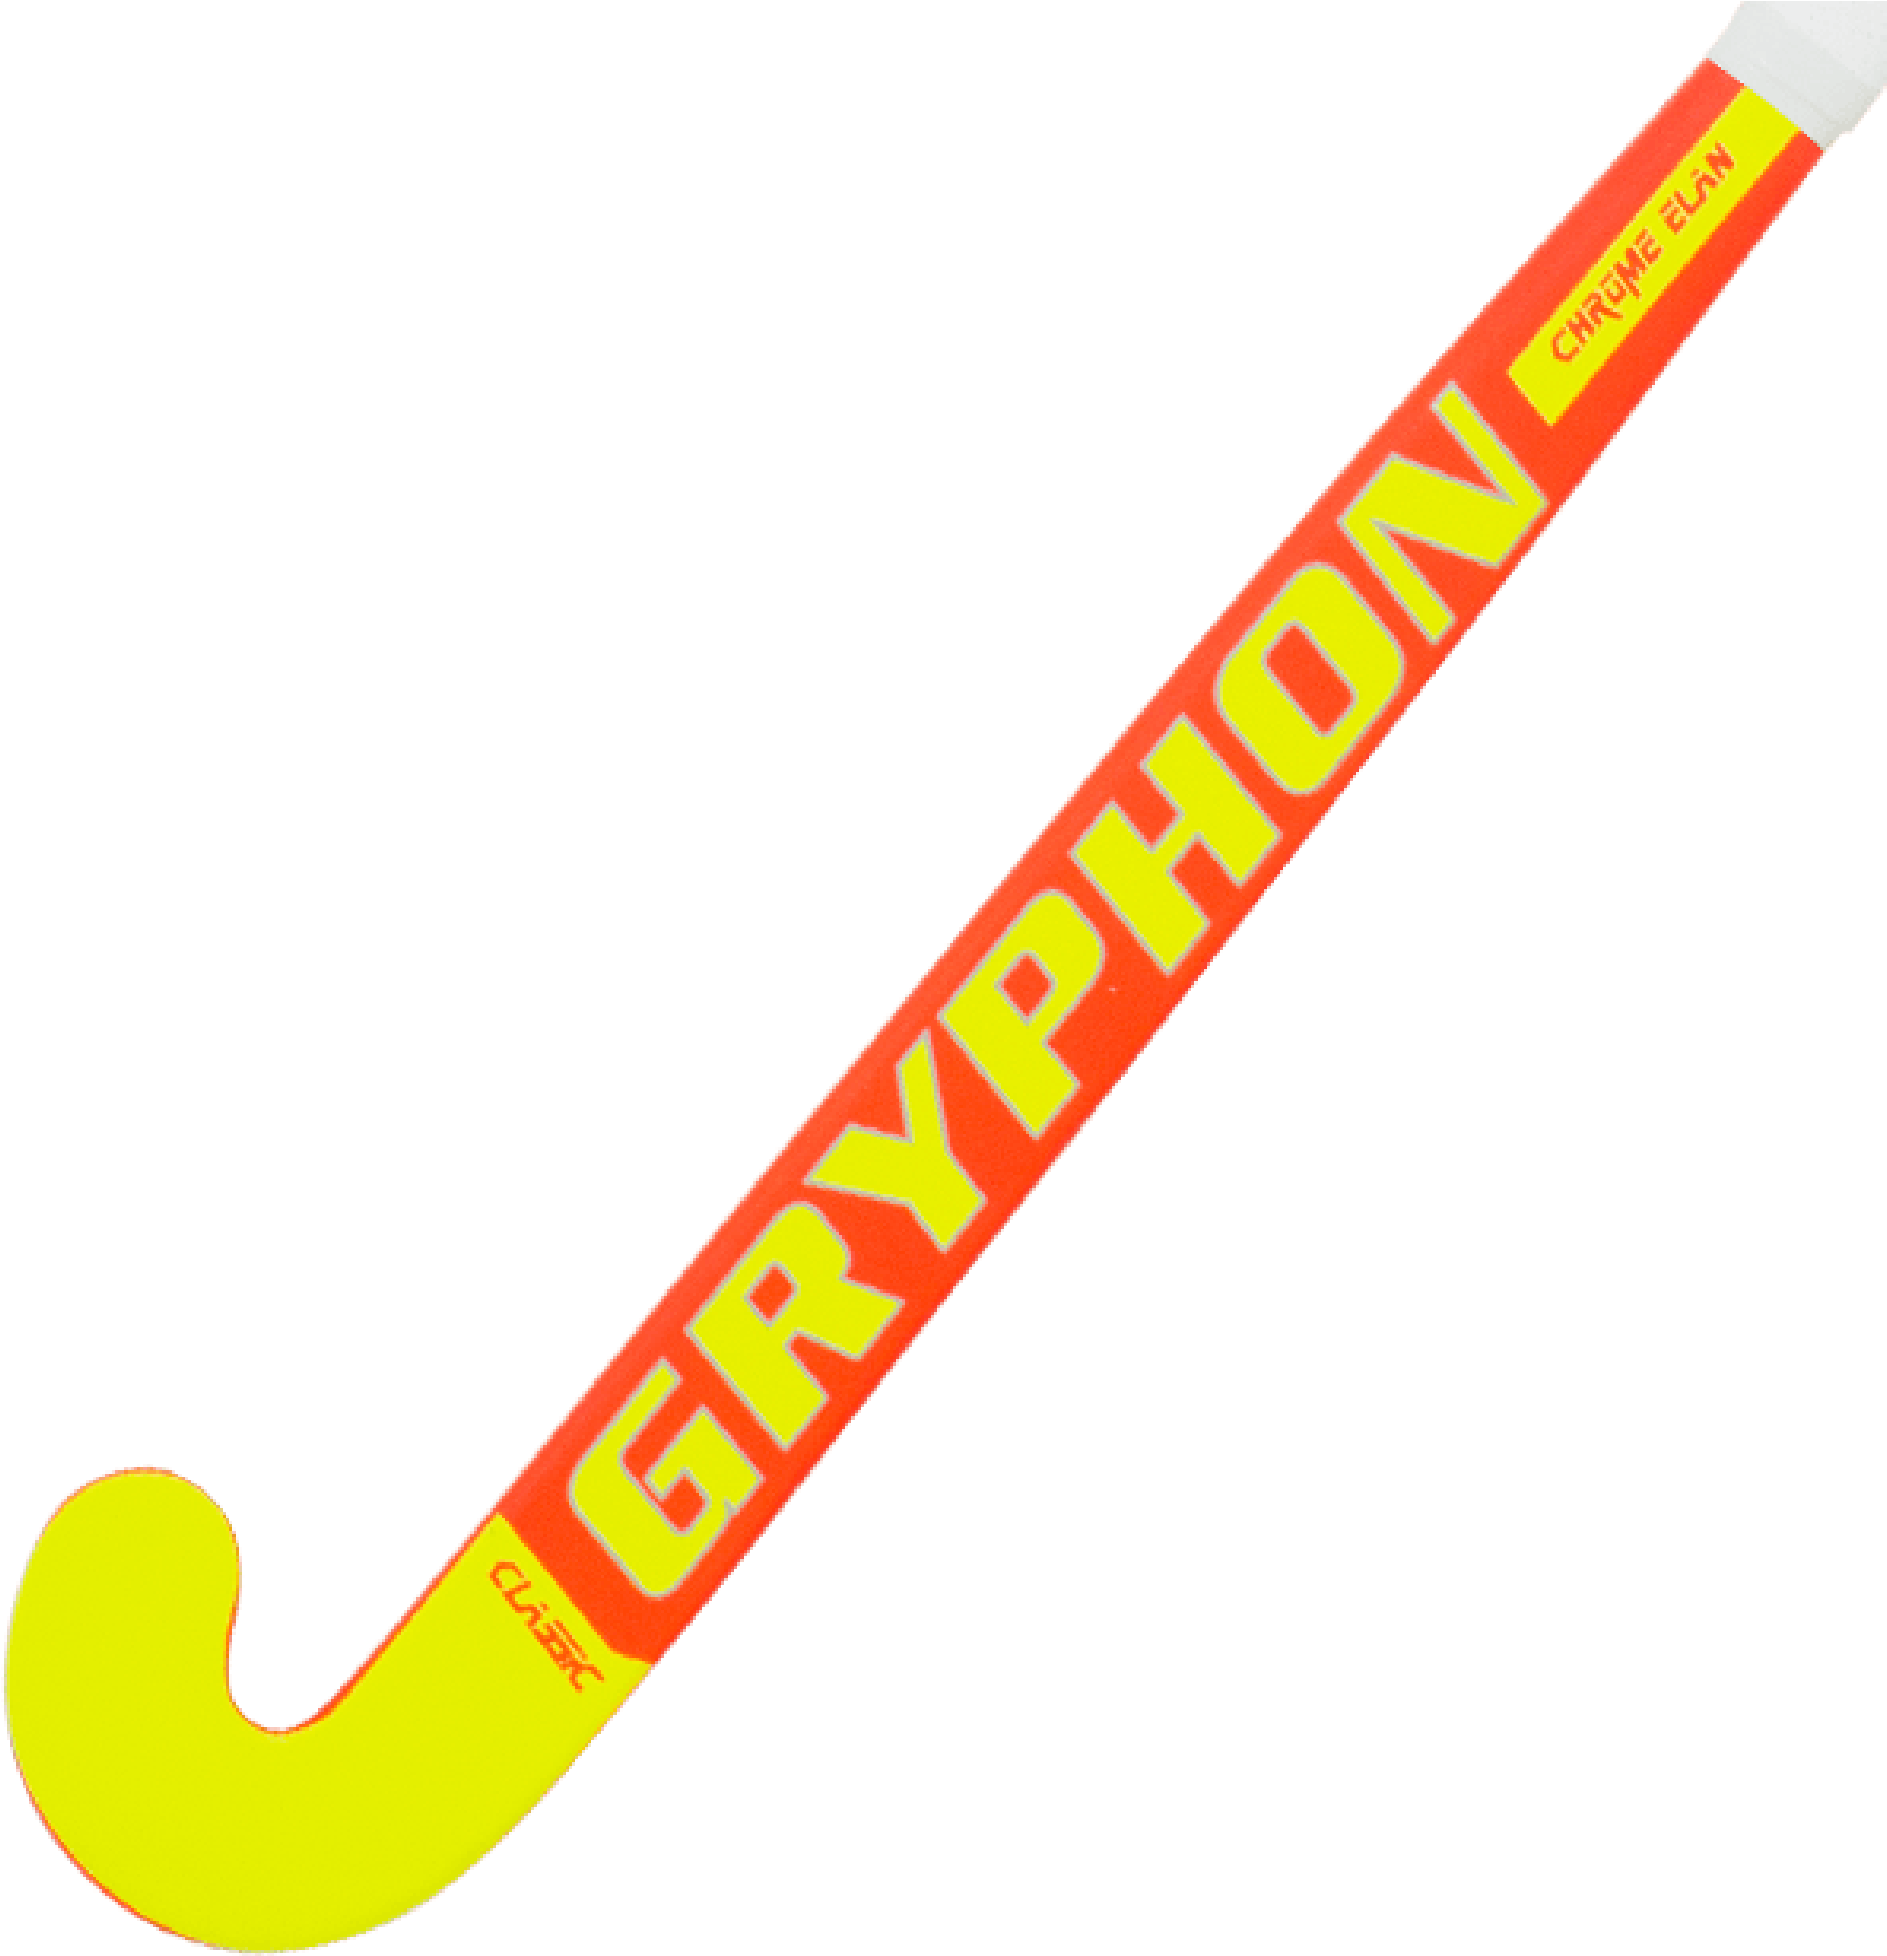 Previous - Gryphon Chrome Solo Cc Field Hockey Stick - Black / (2000x2000)